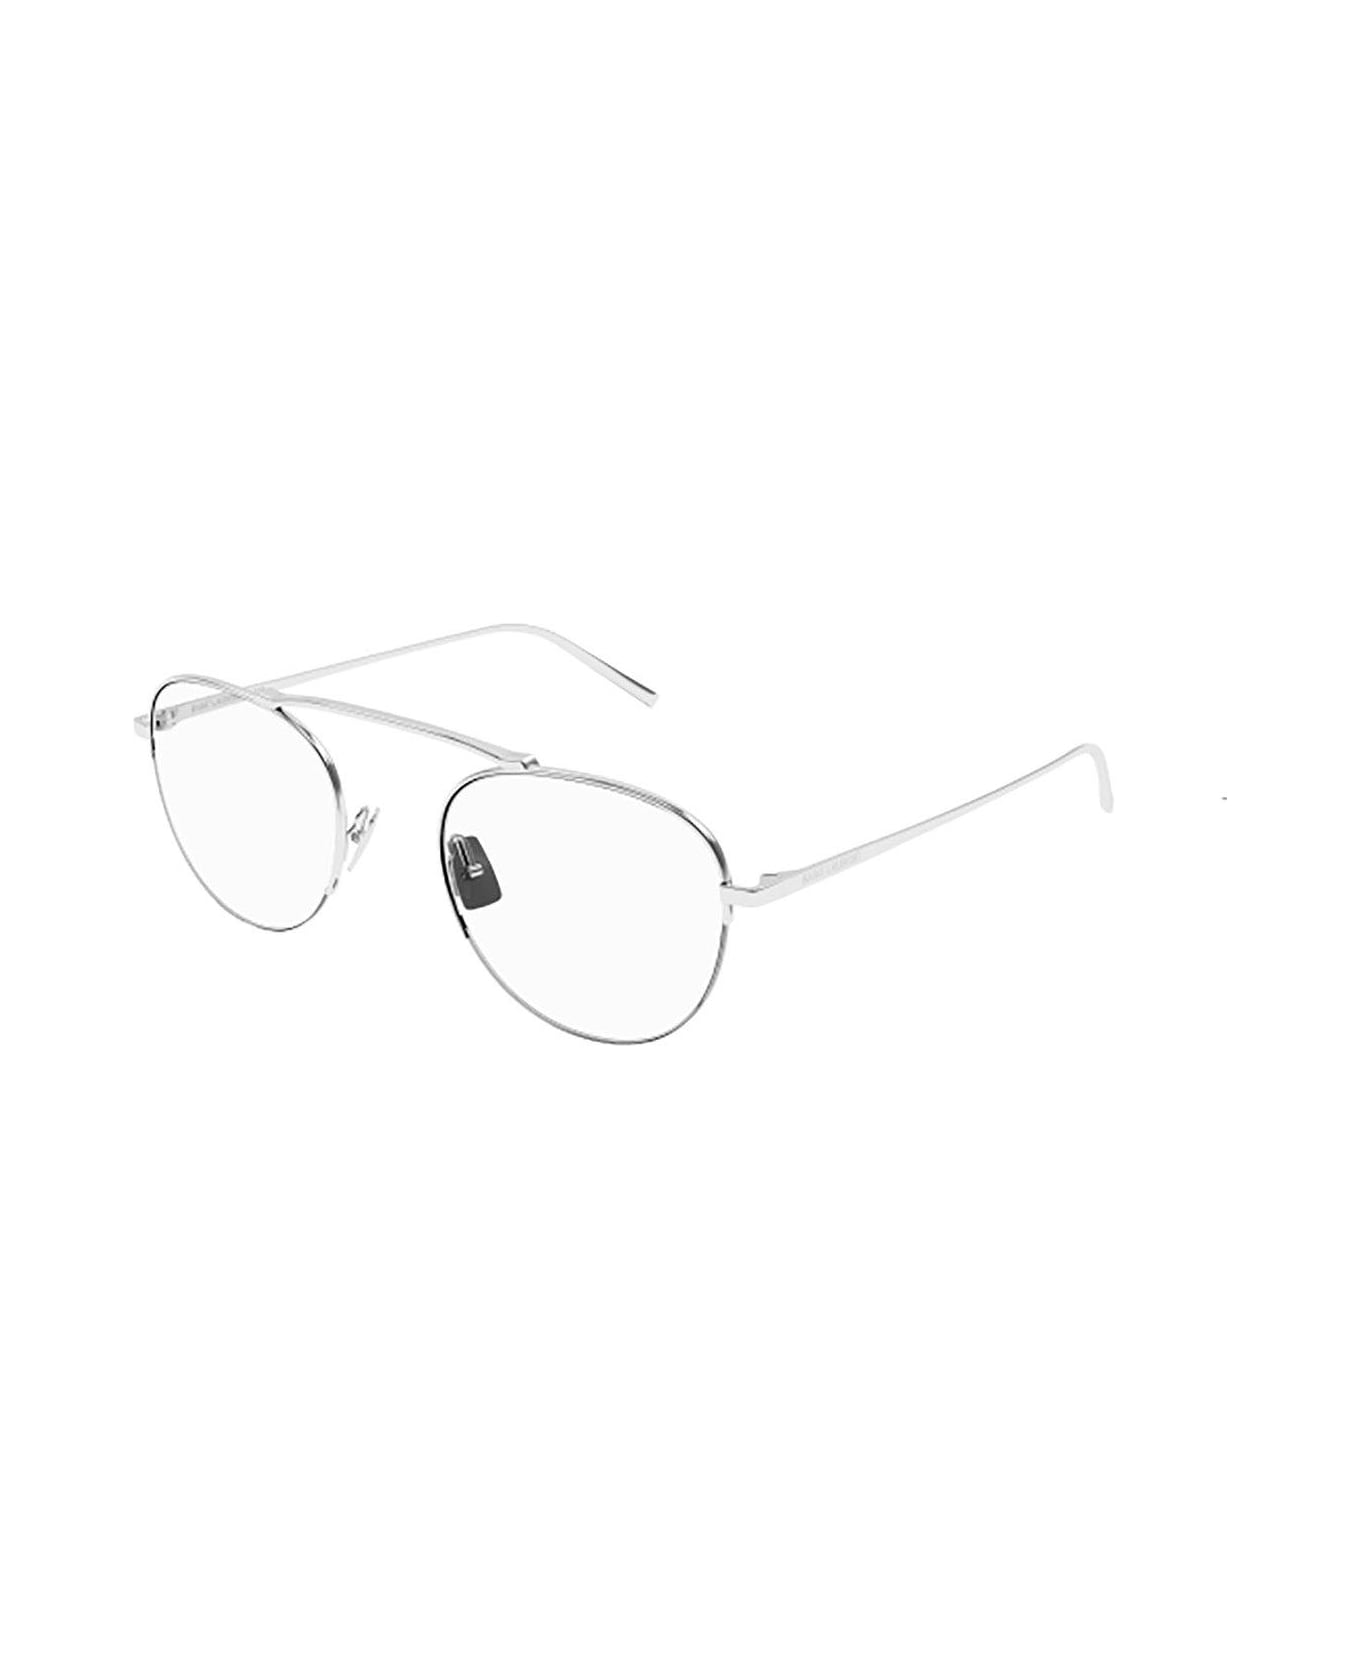 Saint Laurent Eyewear Round Frame Glasses - 001 silver silver transpa アイウェア